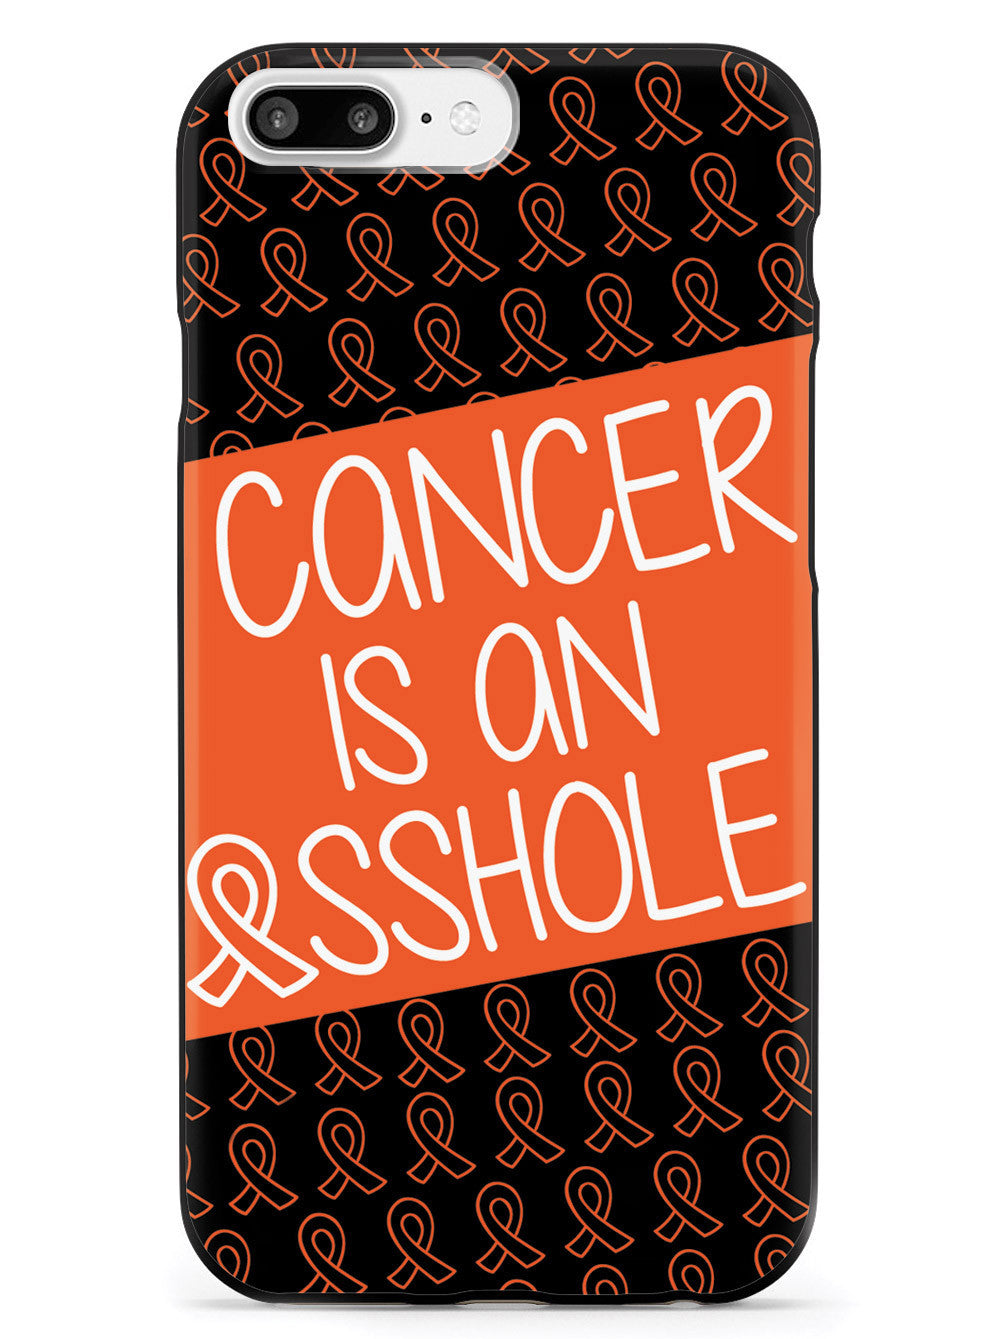 Cancer is an ASSHOLE Orange Case